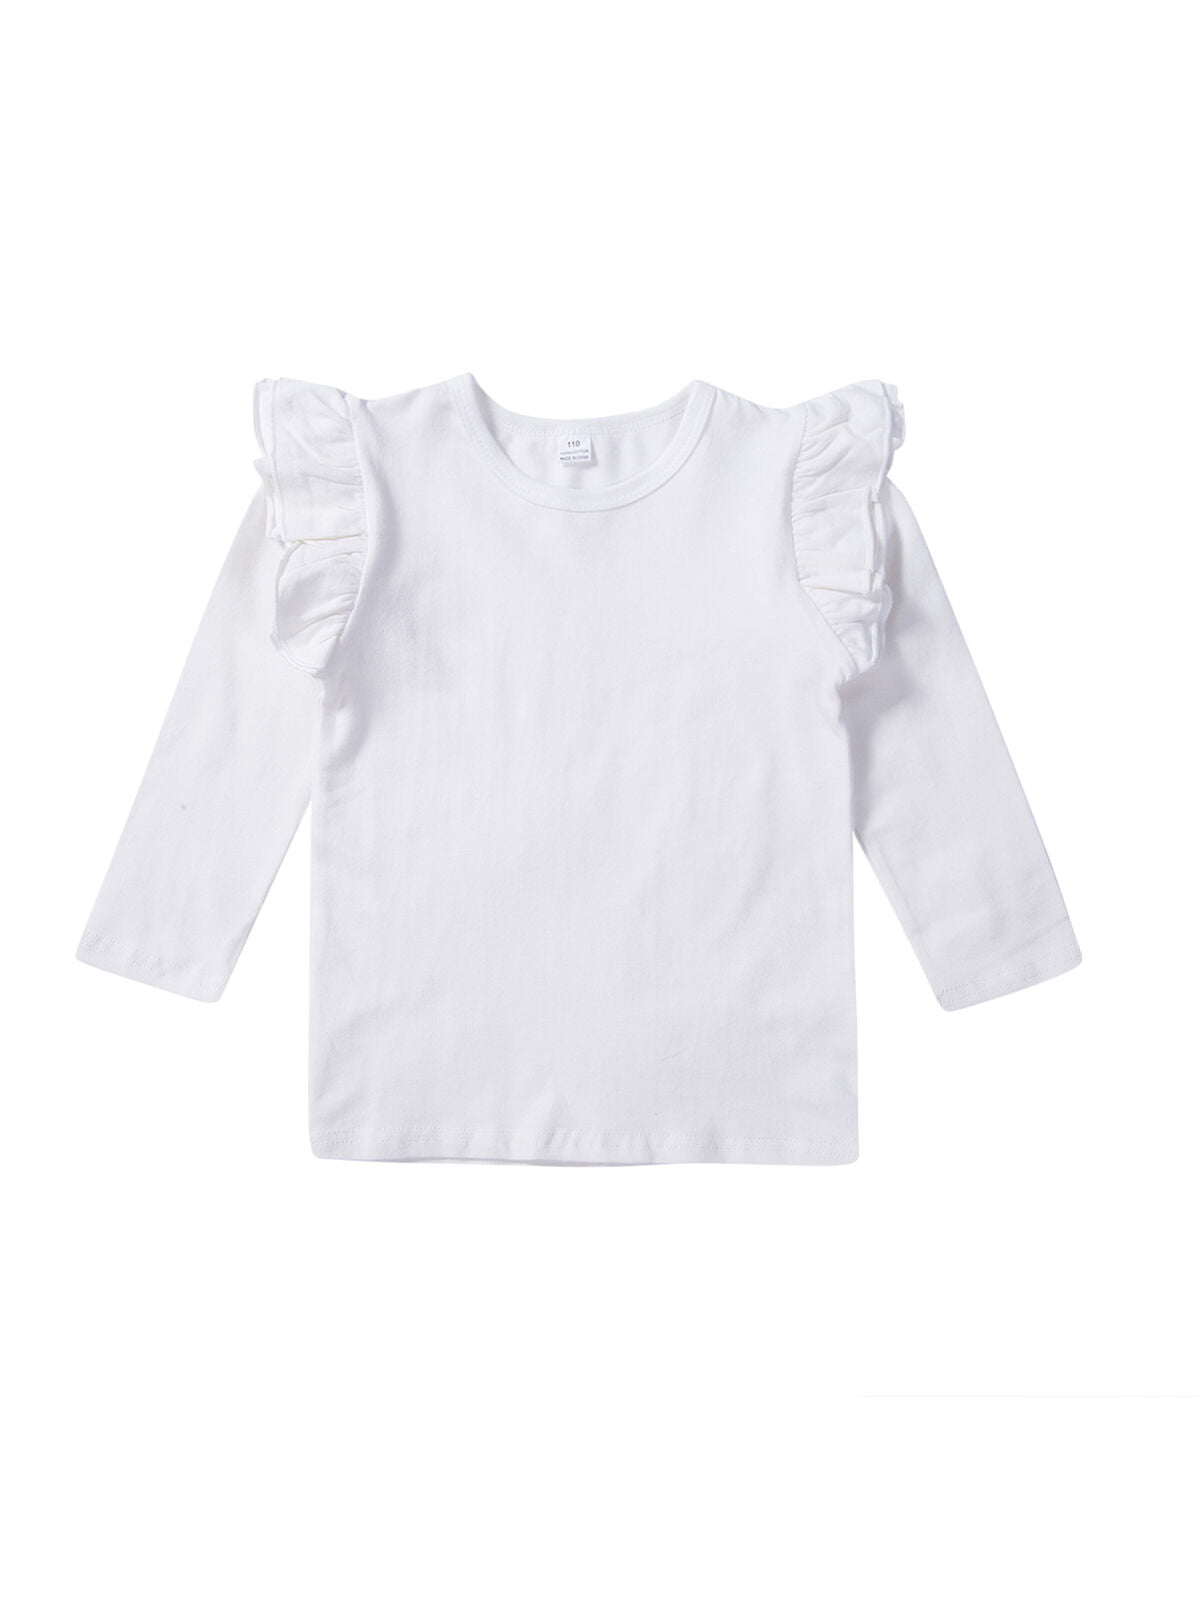 Qiylii Kids Baby Girl Plain Tee Shirts Ruffle Short Sleeve Basic Cotton T-Shirt Tops Blouse Clothes for Toddler 